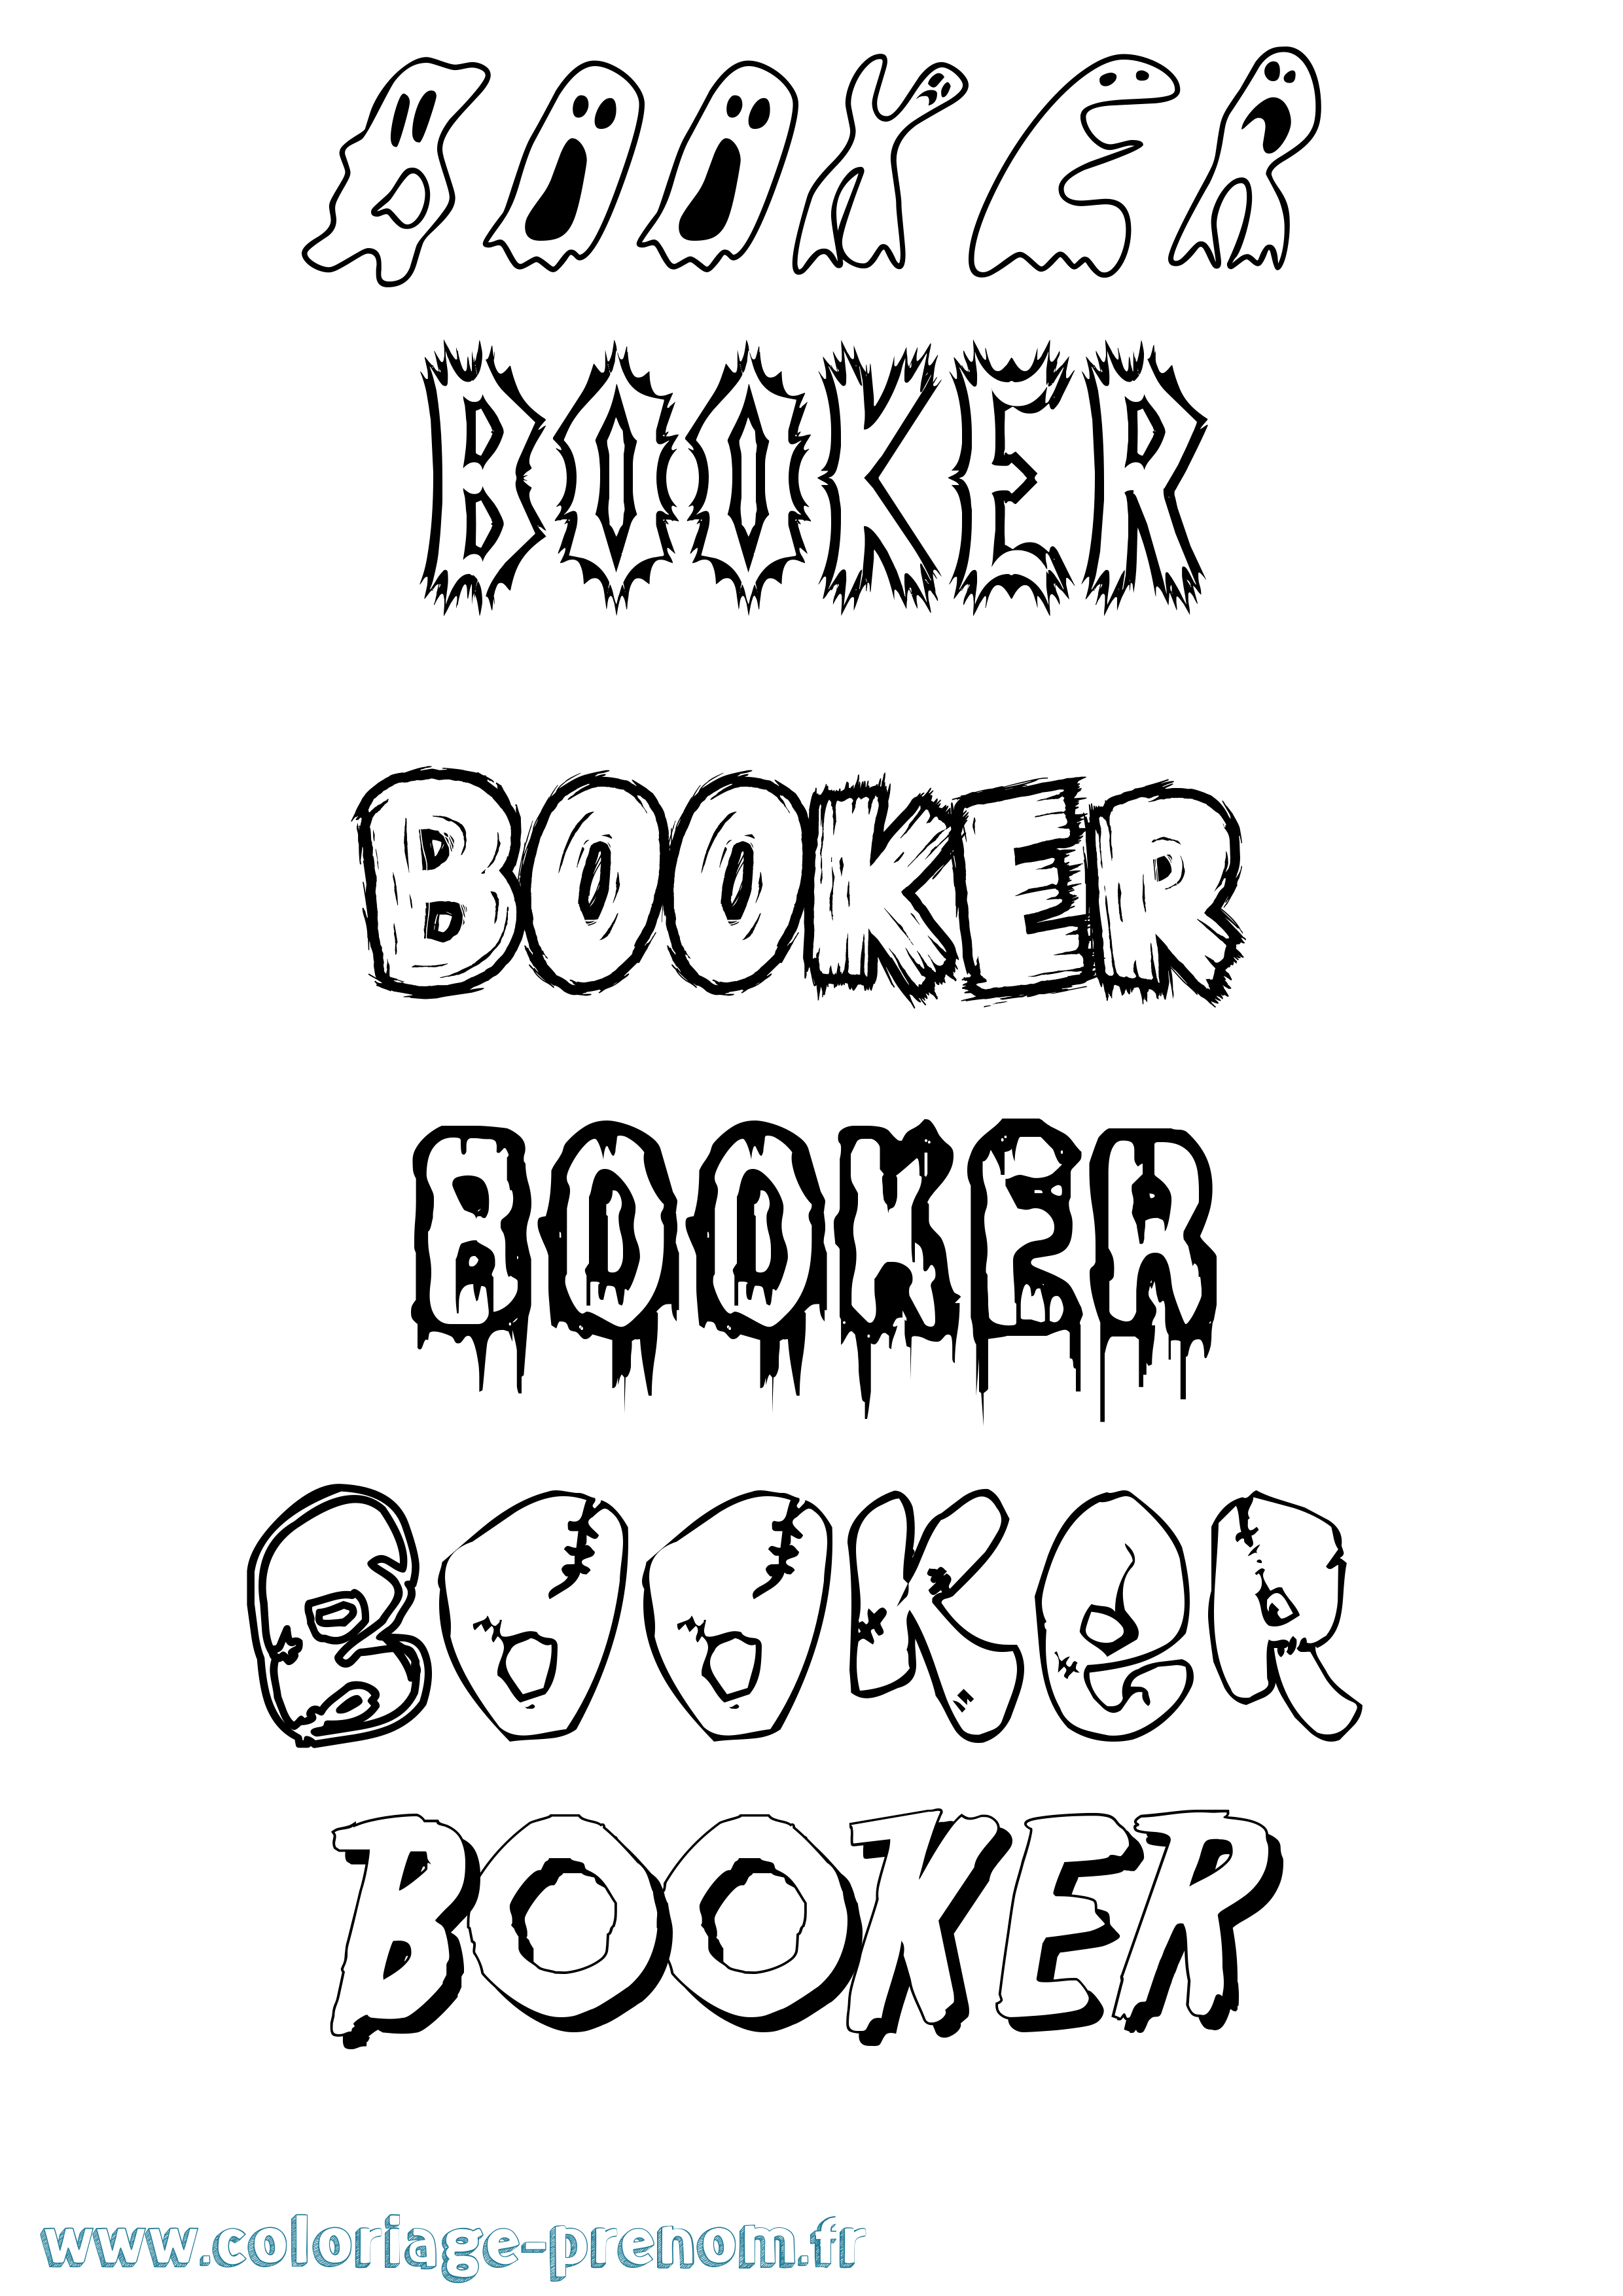 Coloriage prénom Booker Frisson